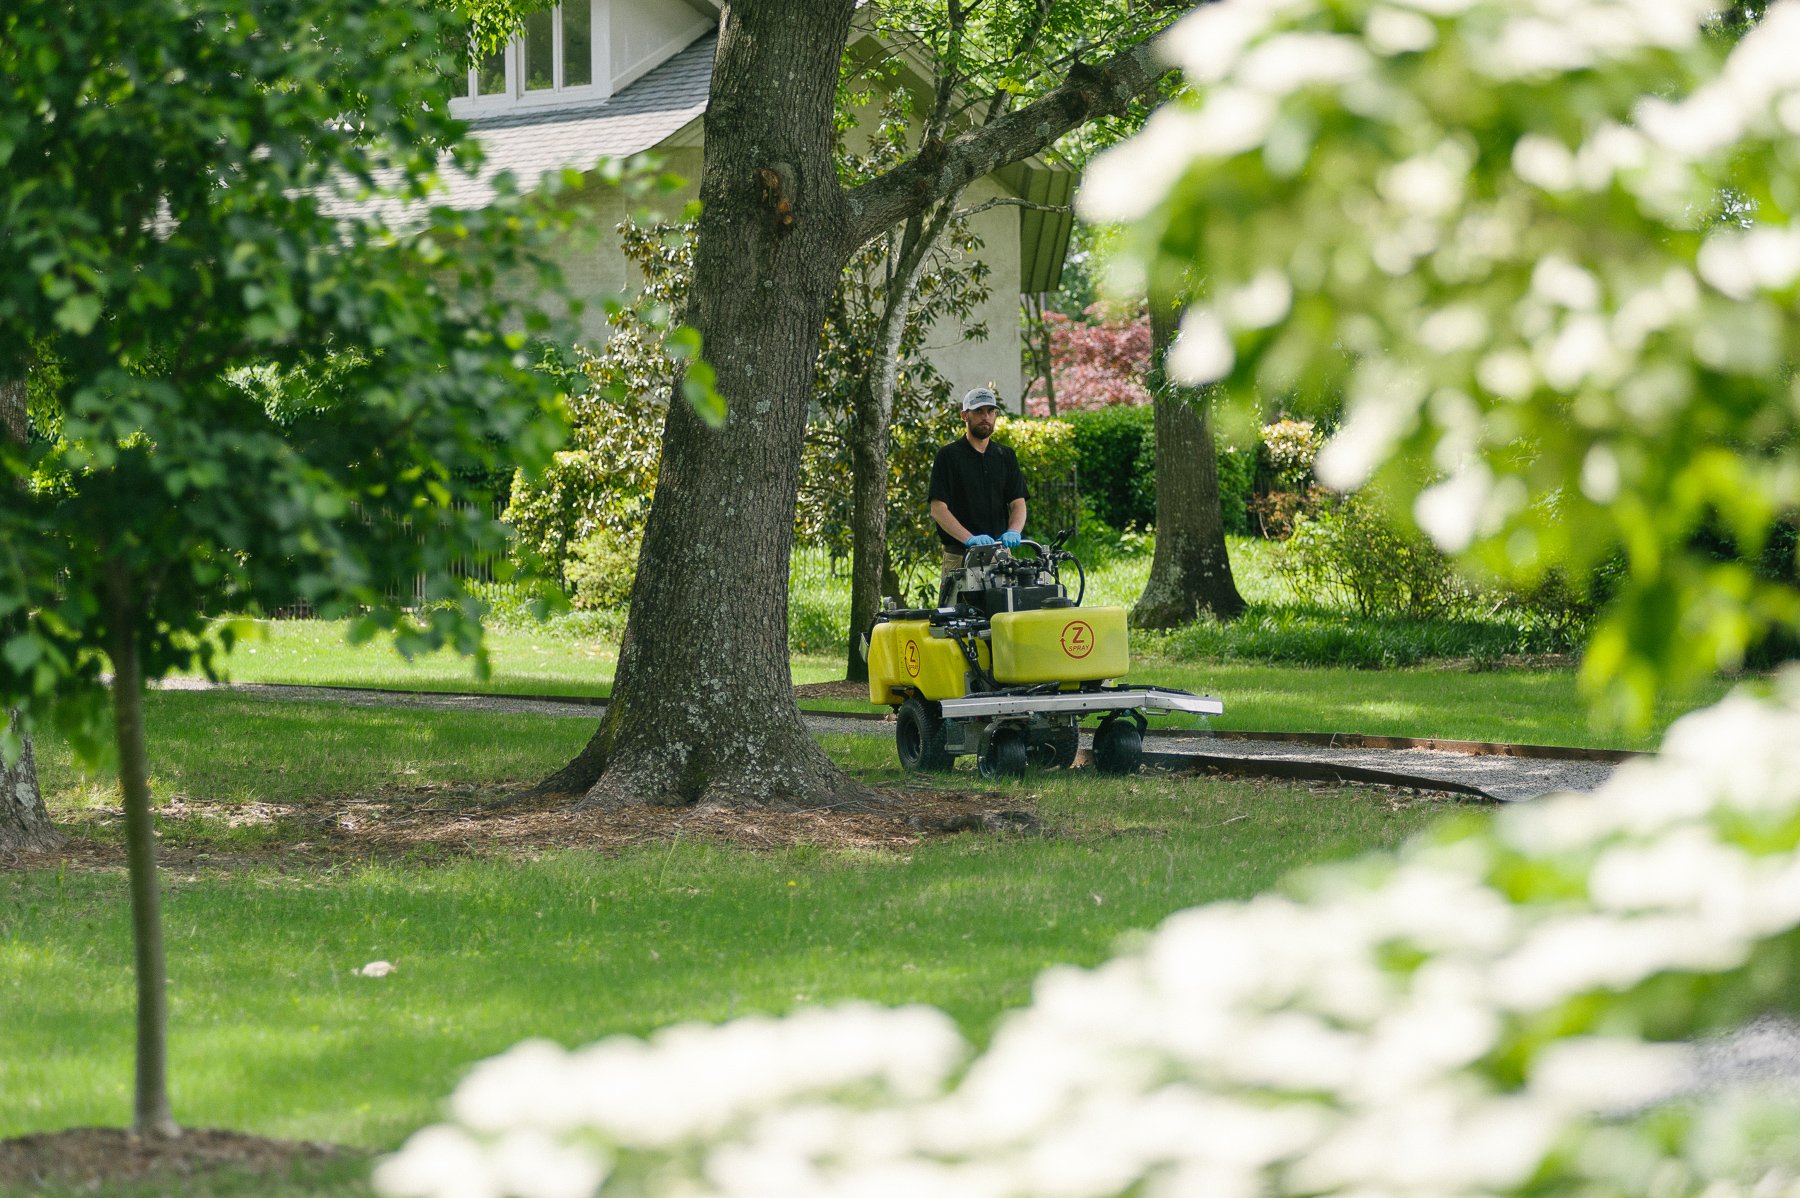 lawn technician near tree with mulch ring